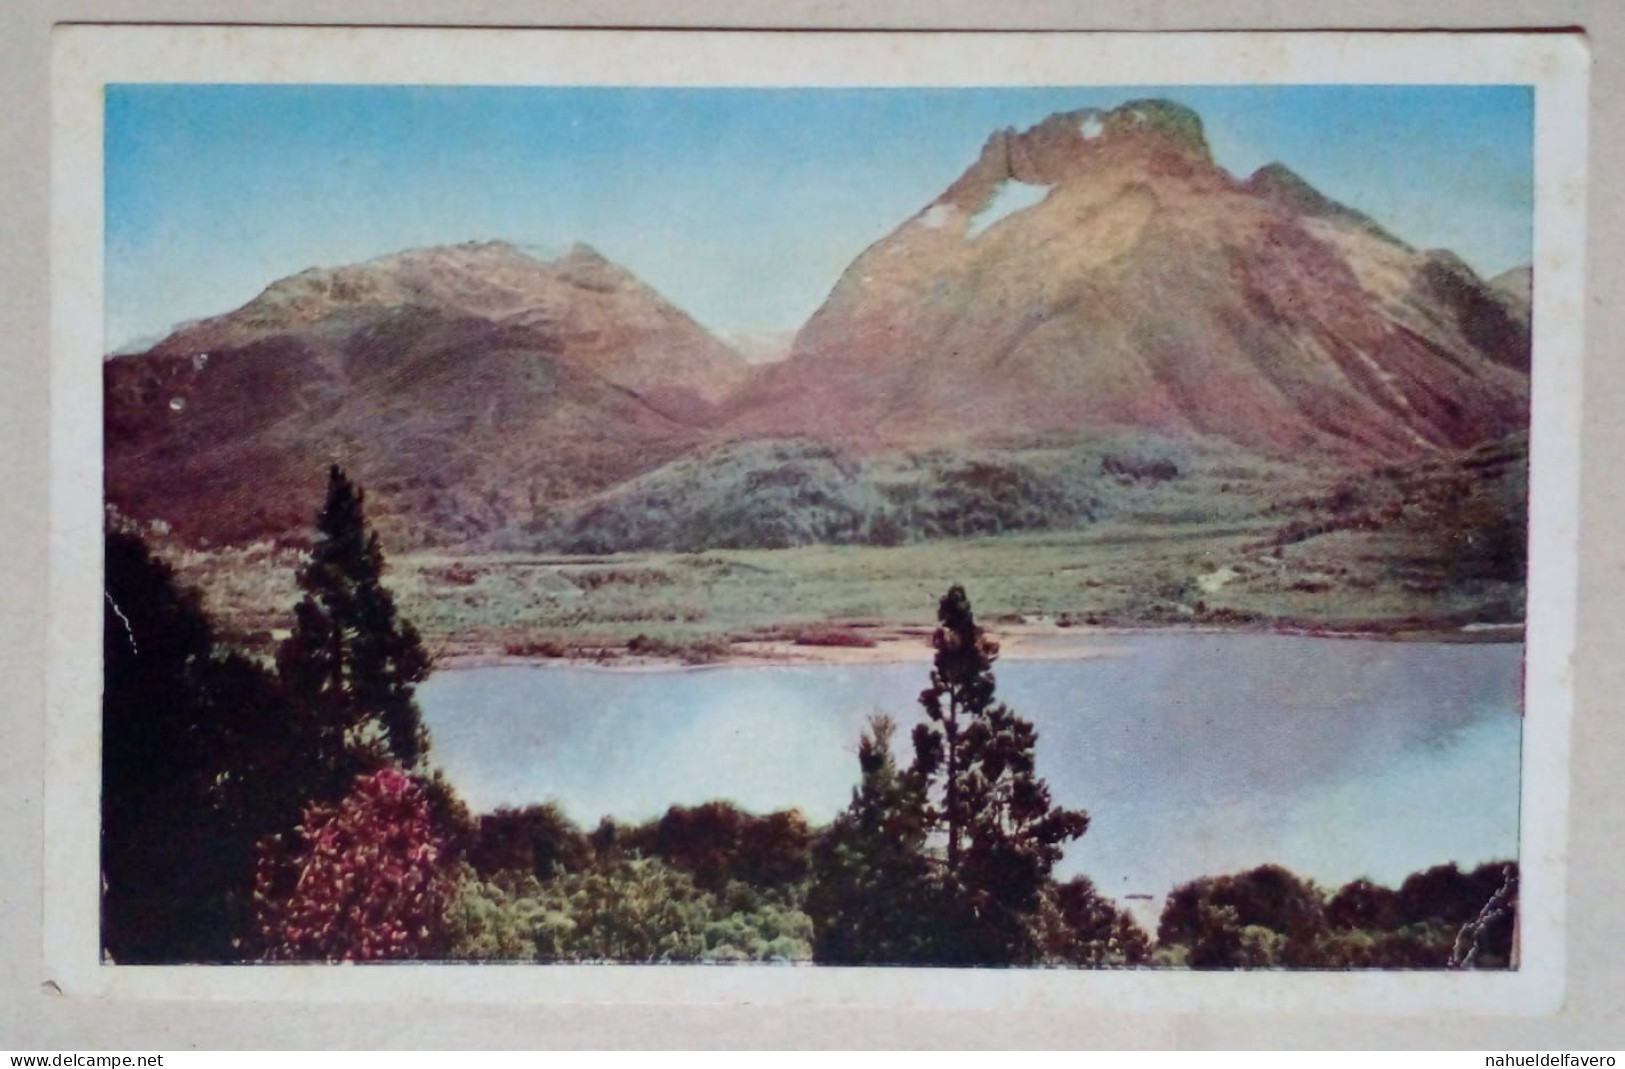 Carte Postale - Parc National Nahuel Huapi, Bariloche, Argentine. - Argentina